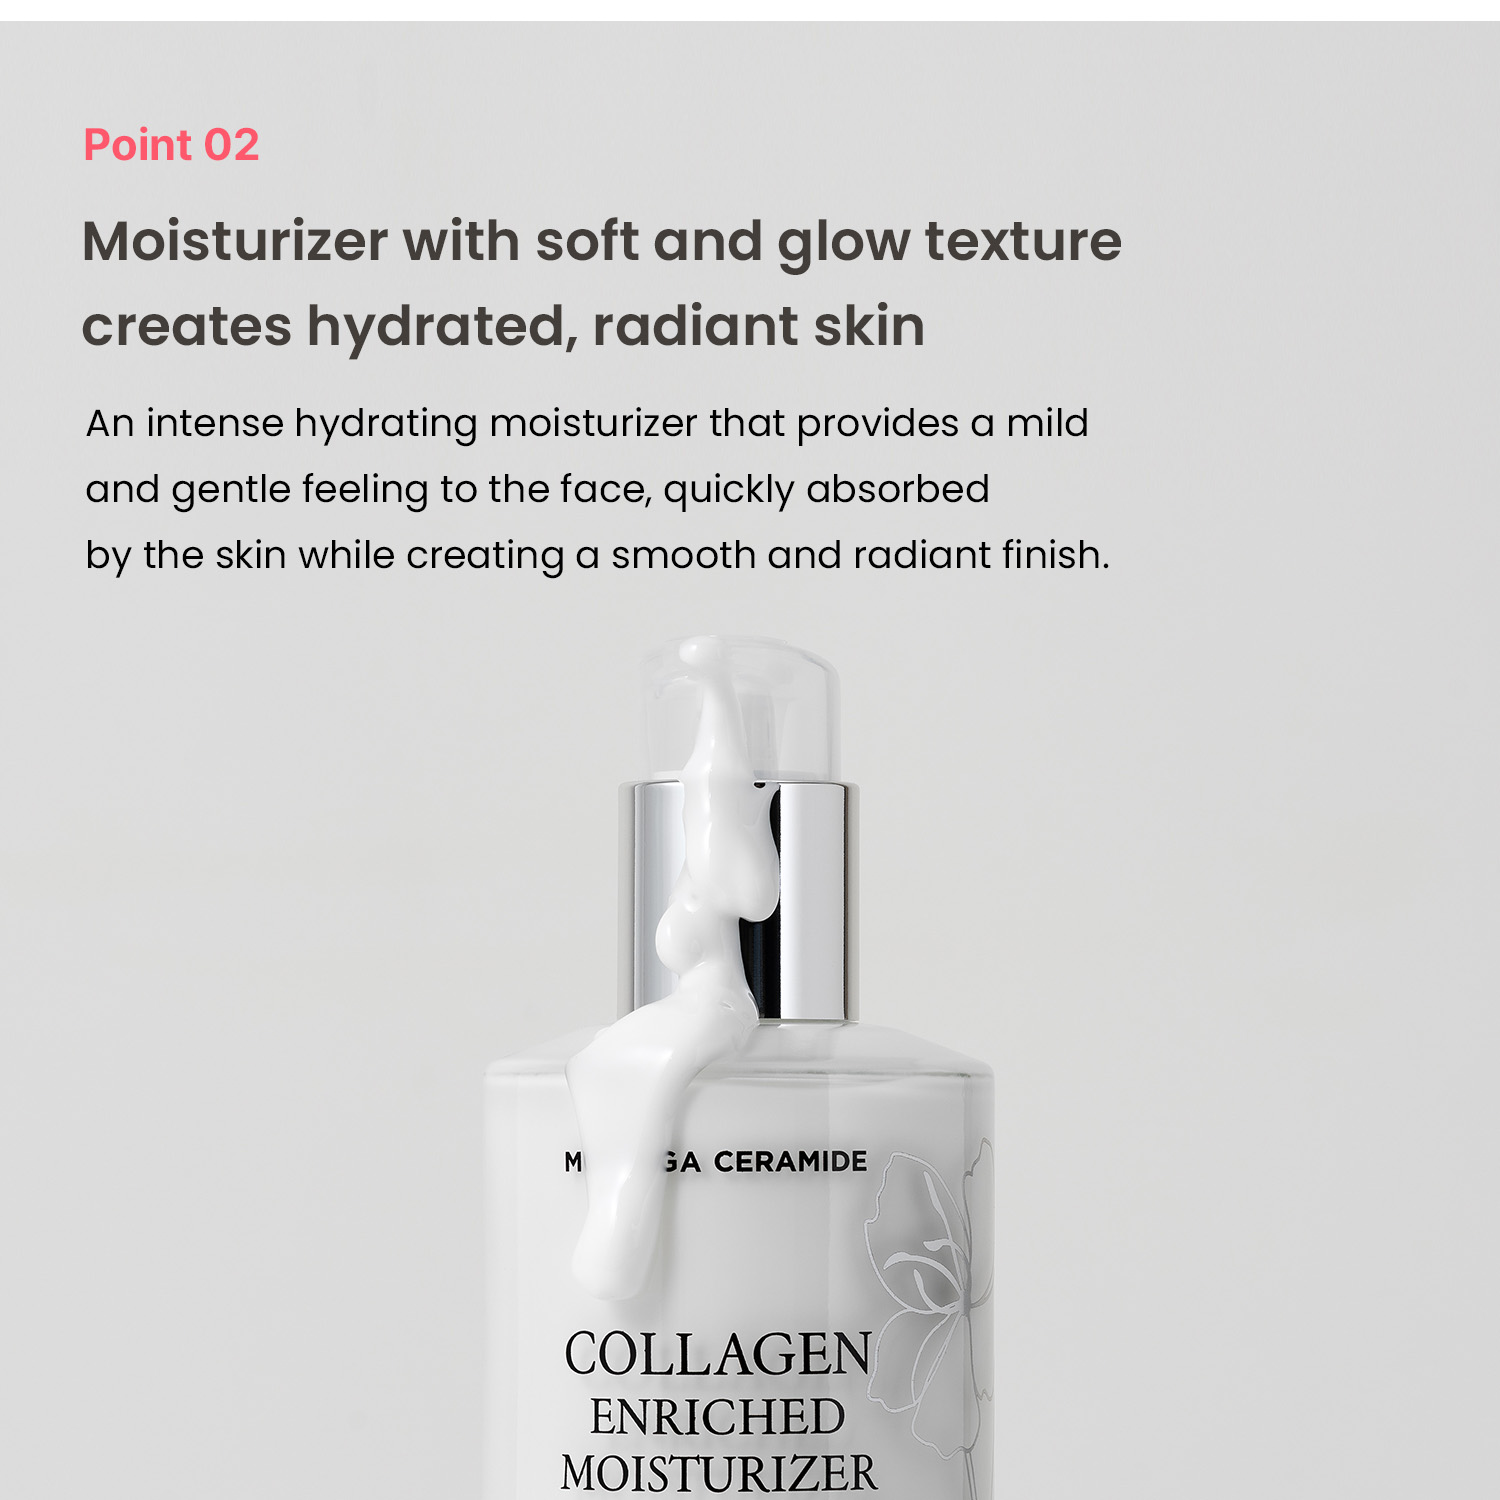 [heimish] Moringa Ceramide Collagen Enriched Moisturizer 120ml